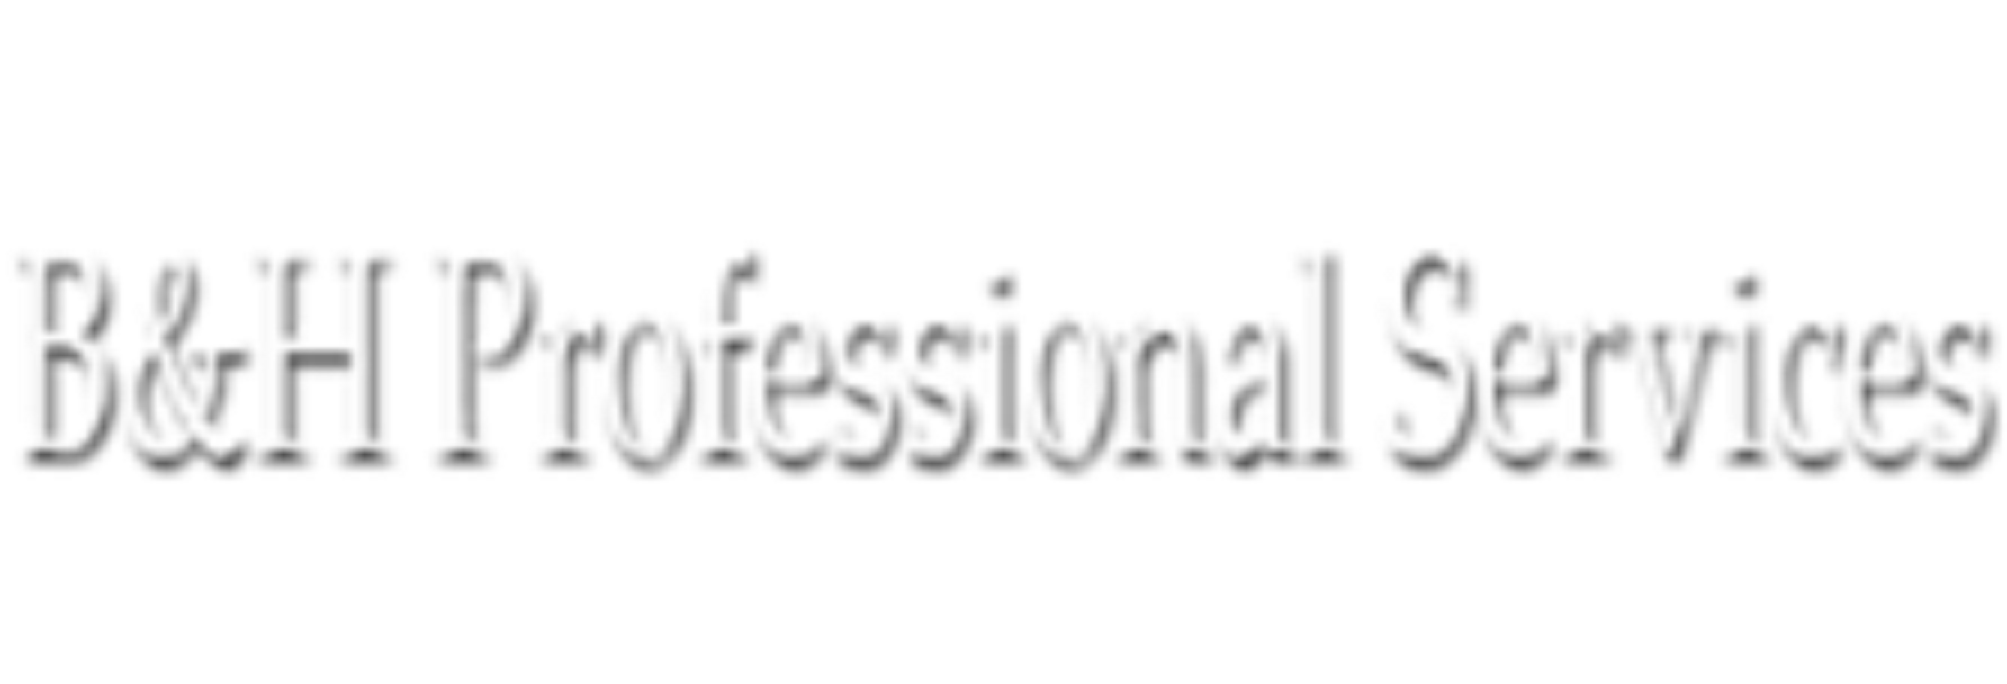 B&H Professional Services Logo